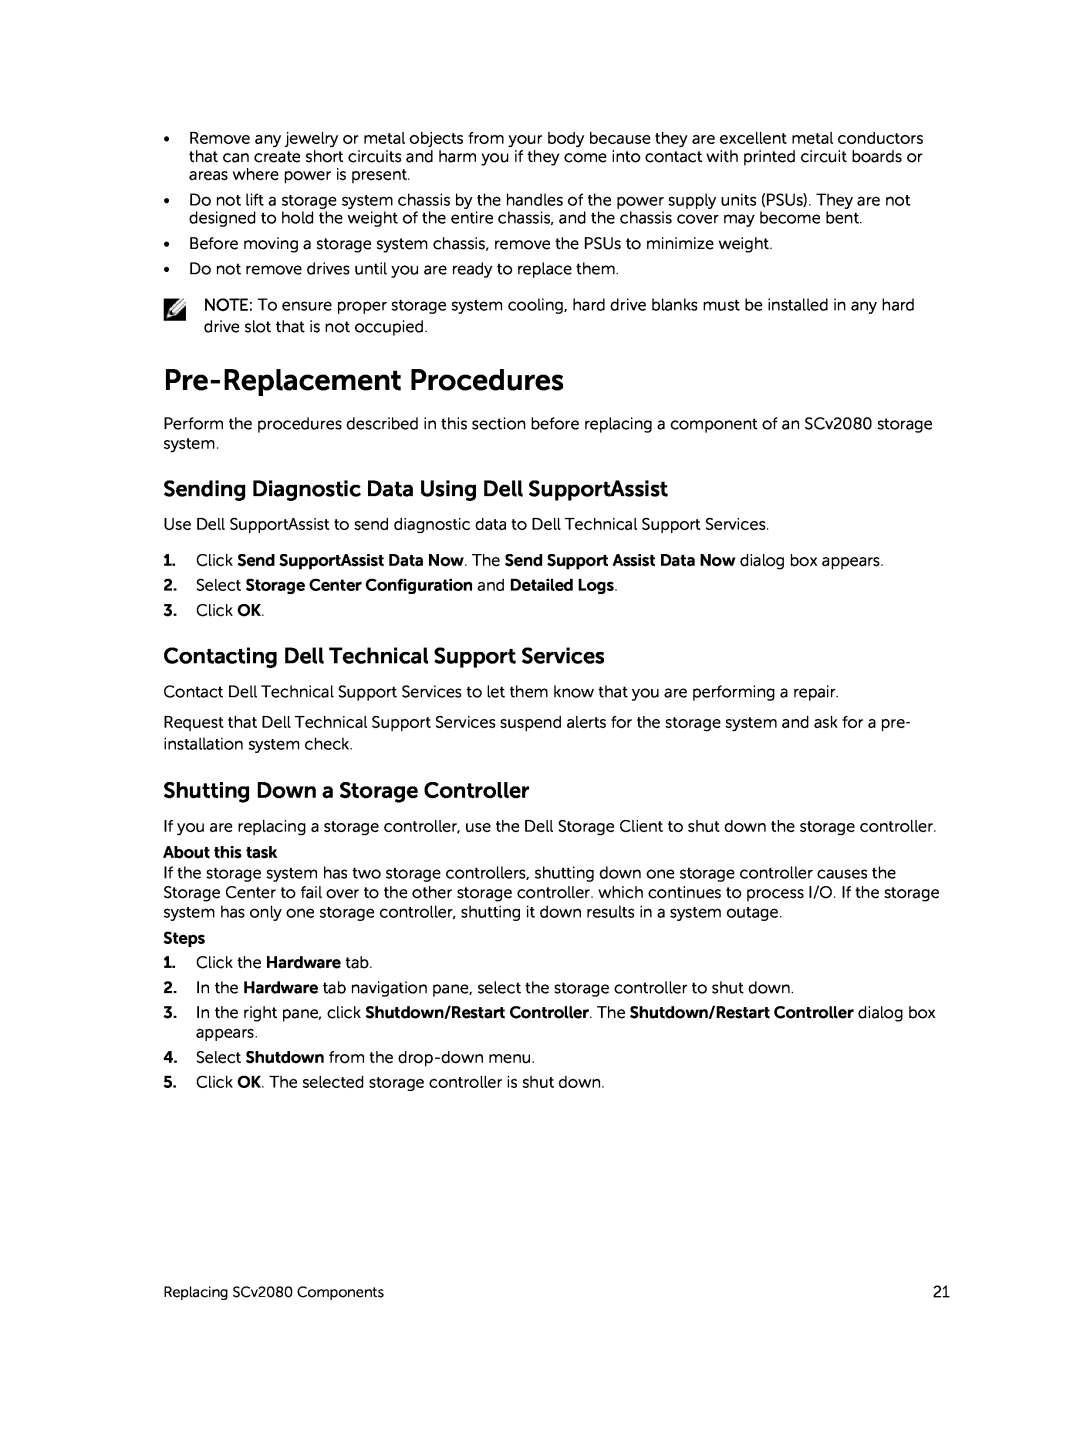 Dell E11J001 owner manual Pre-ReplacementProcedures, Sending Diagnostic Data Using Dell SupportAssist 